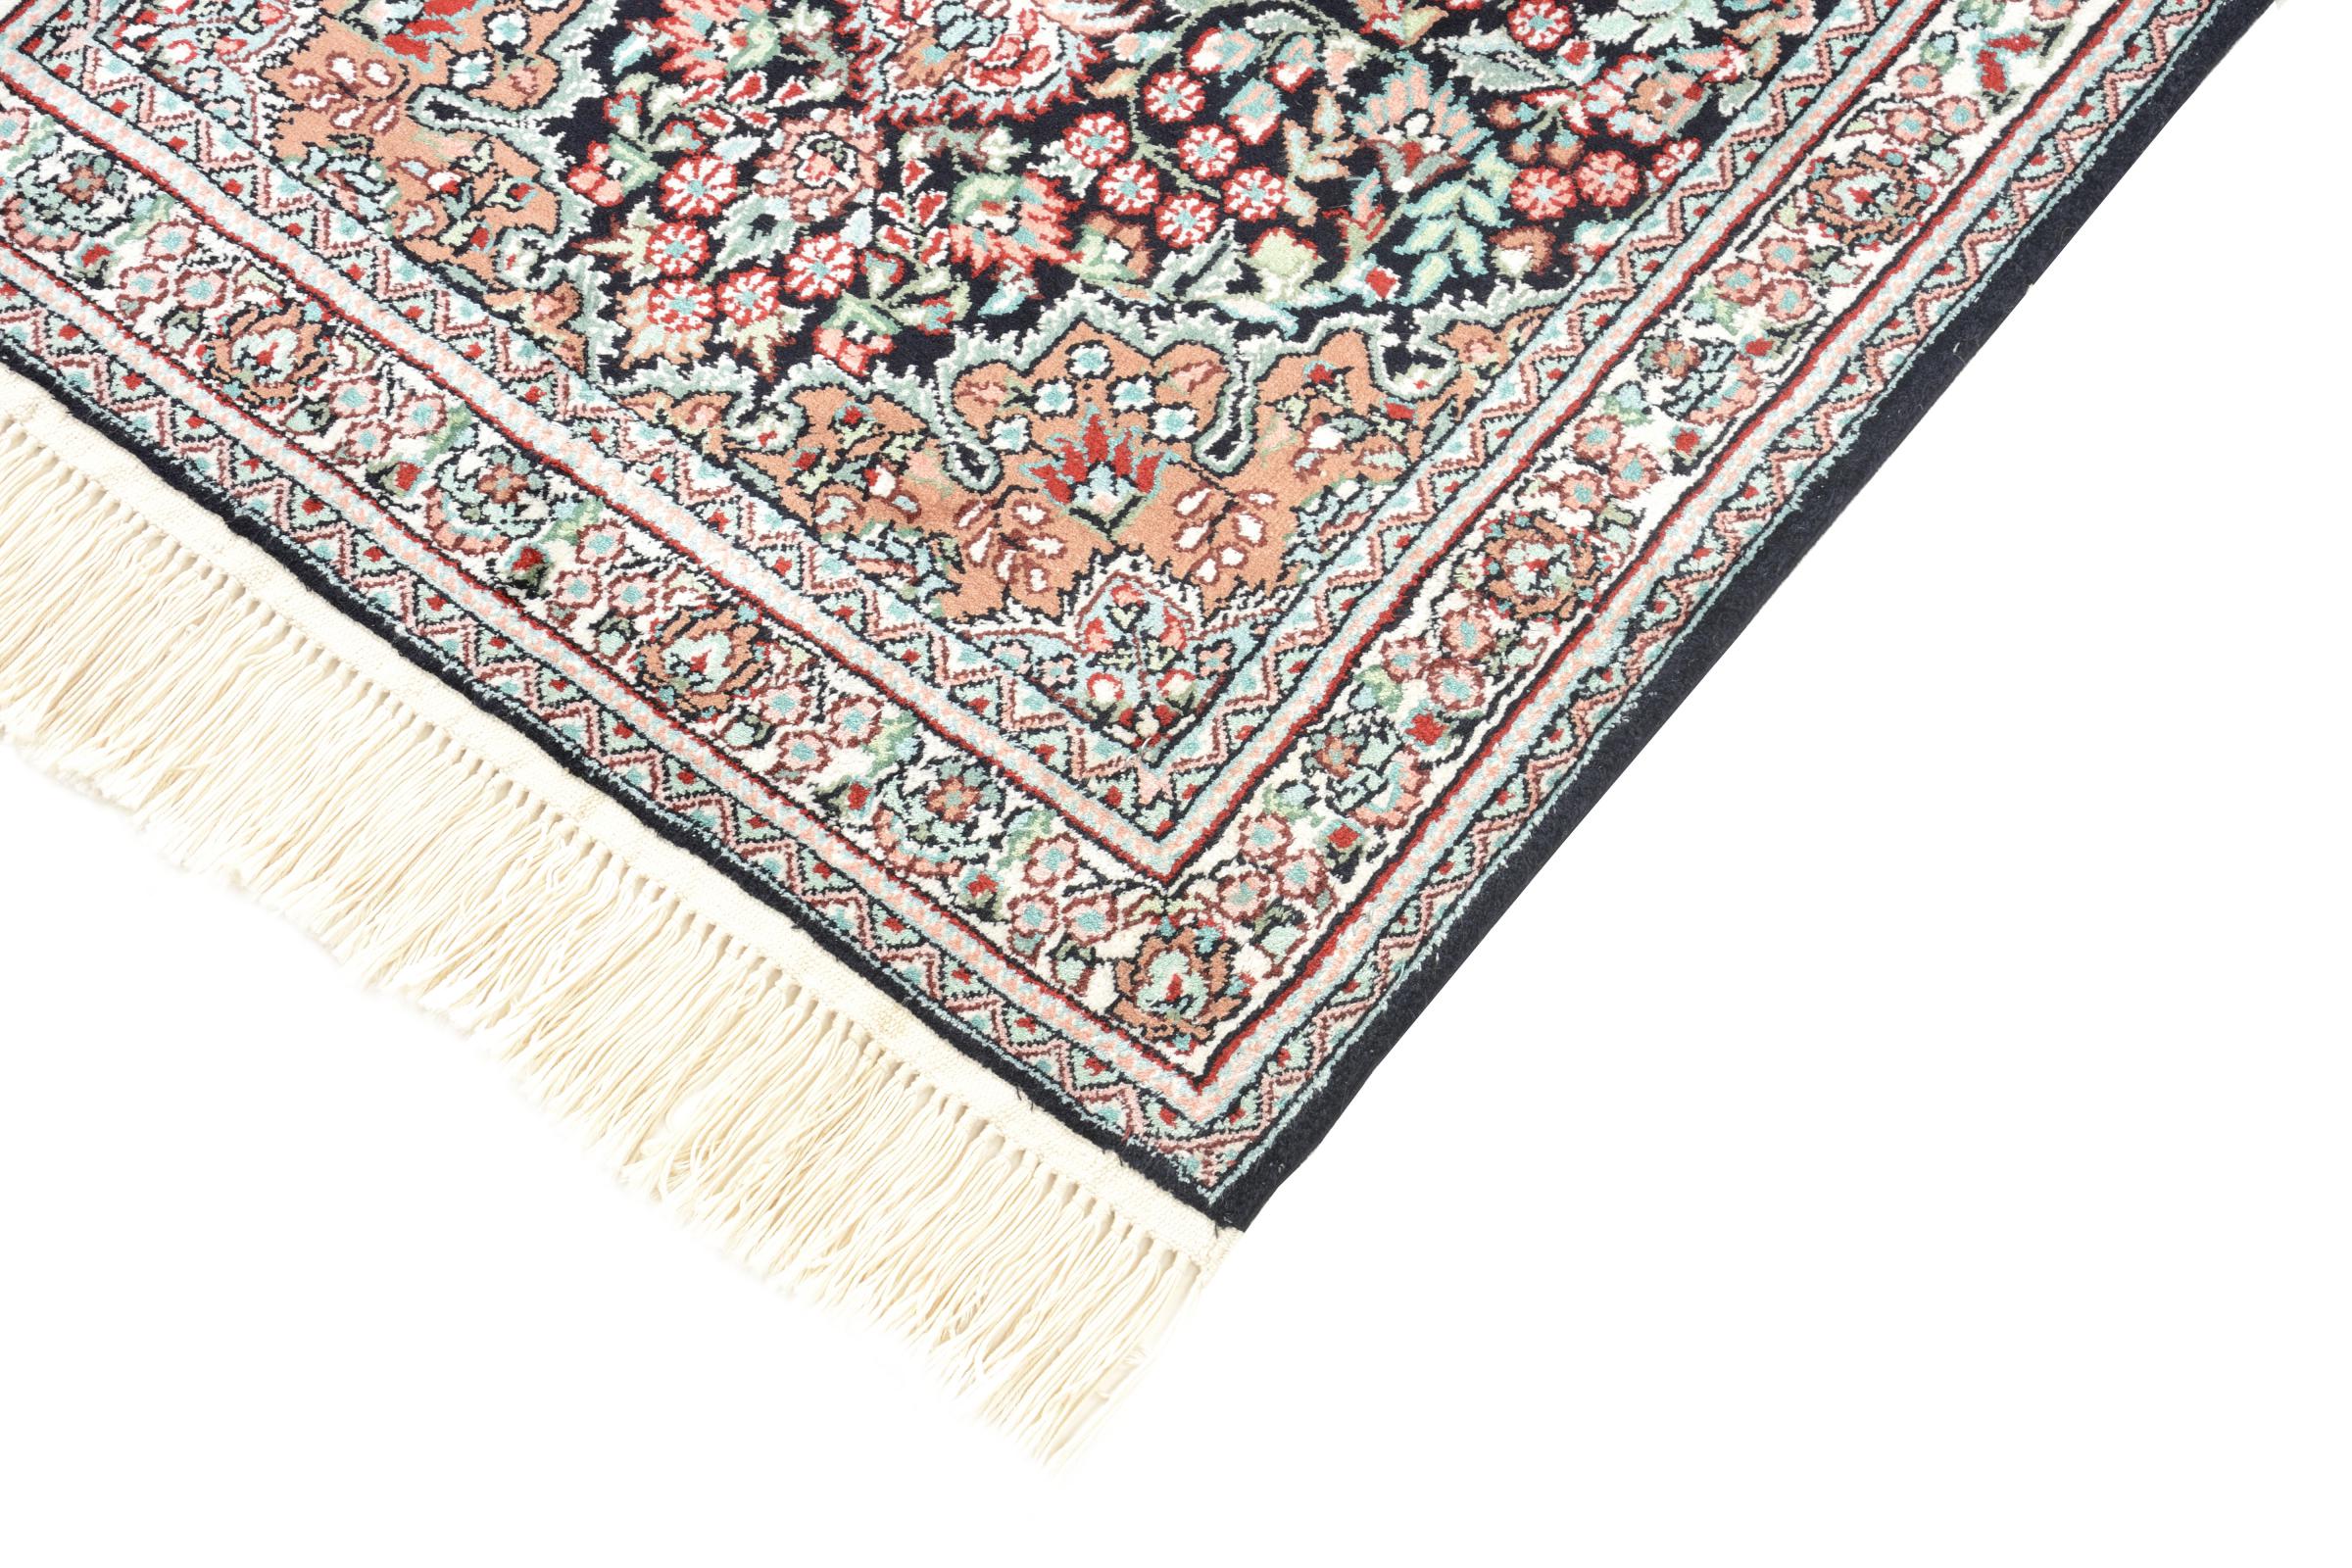 Carpet Padding China Trade,Buy China Direct From Carpet Padding